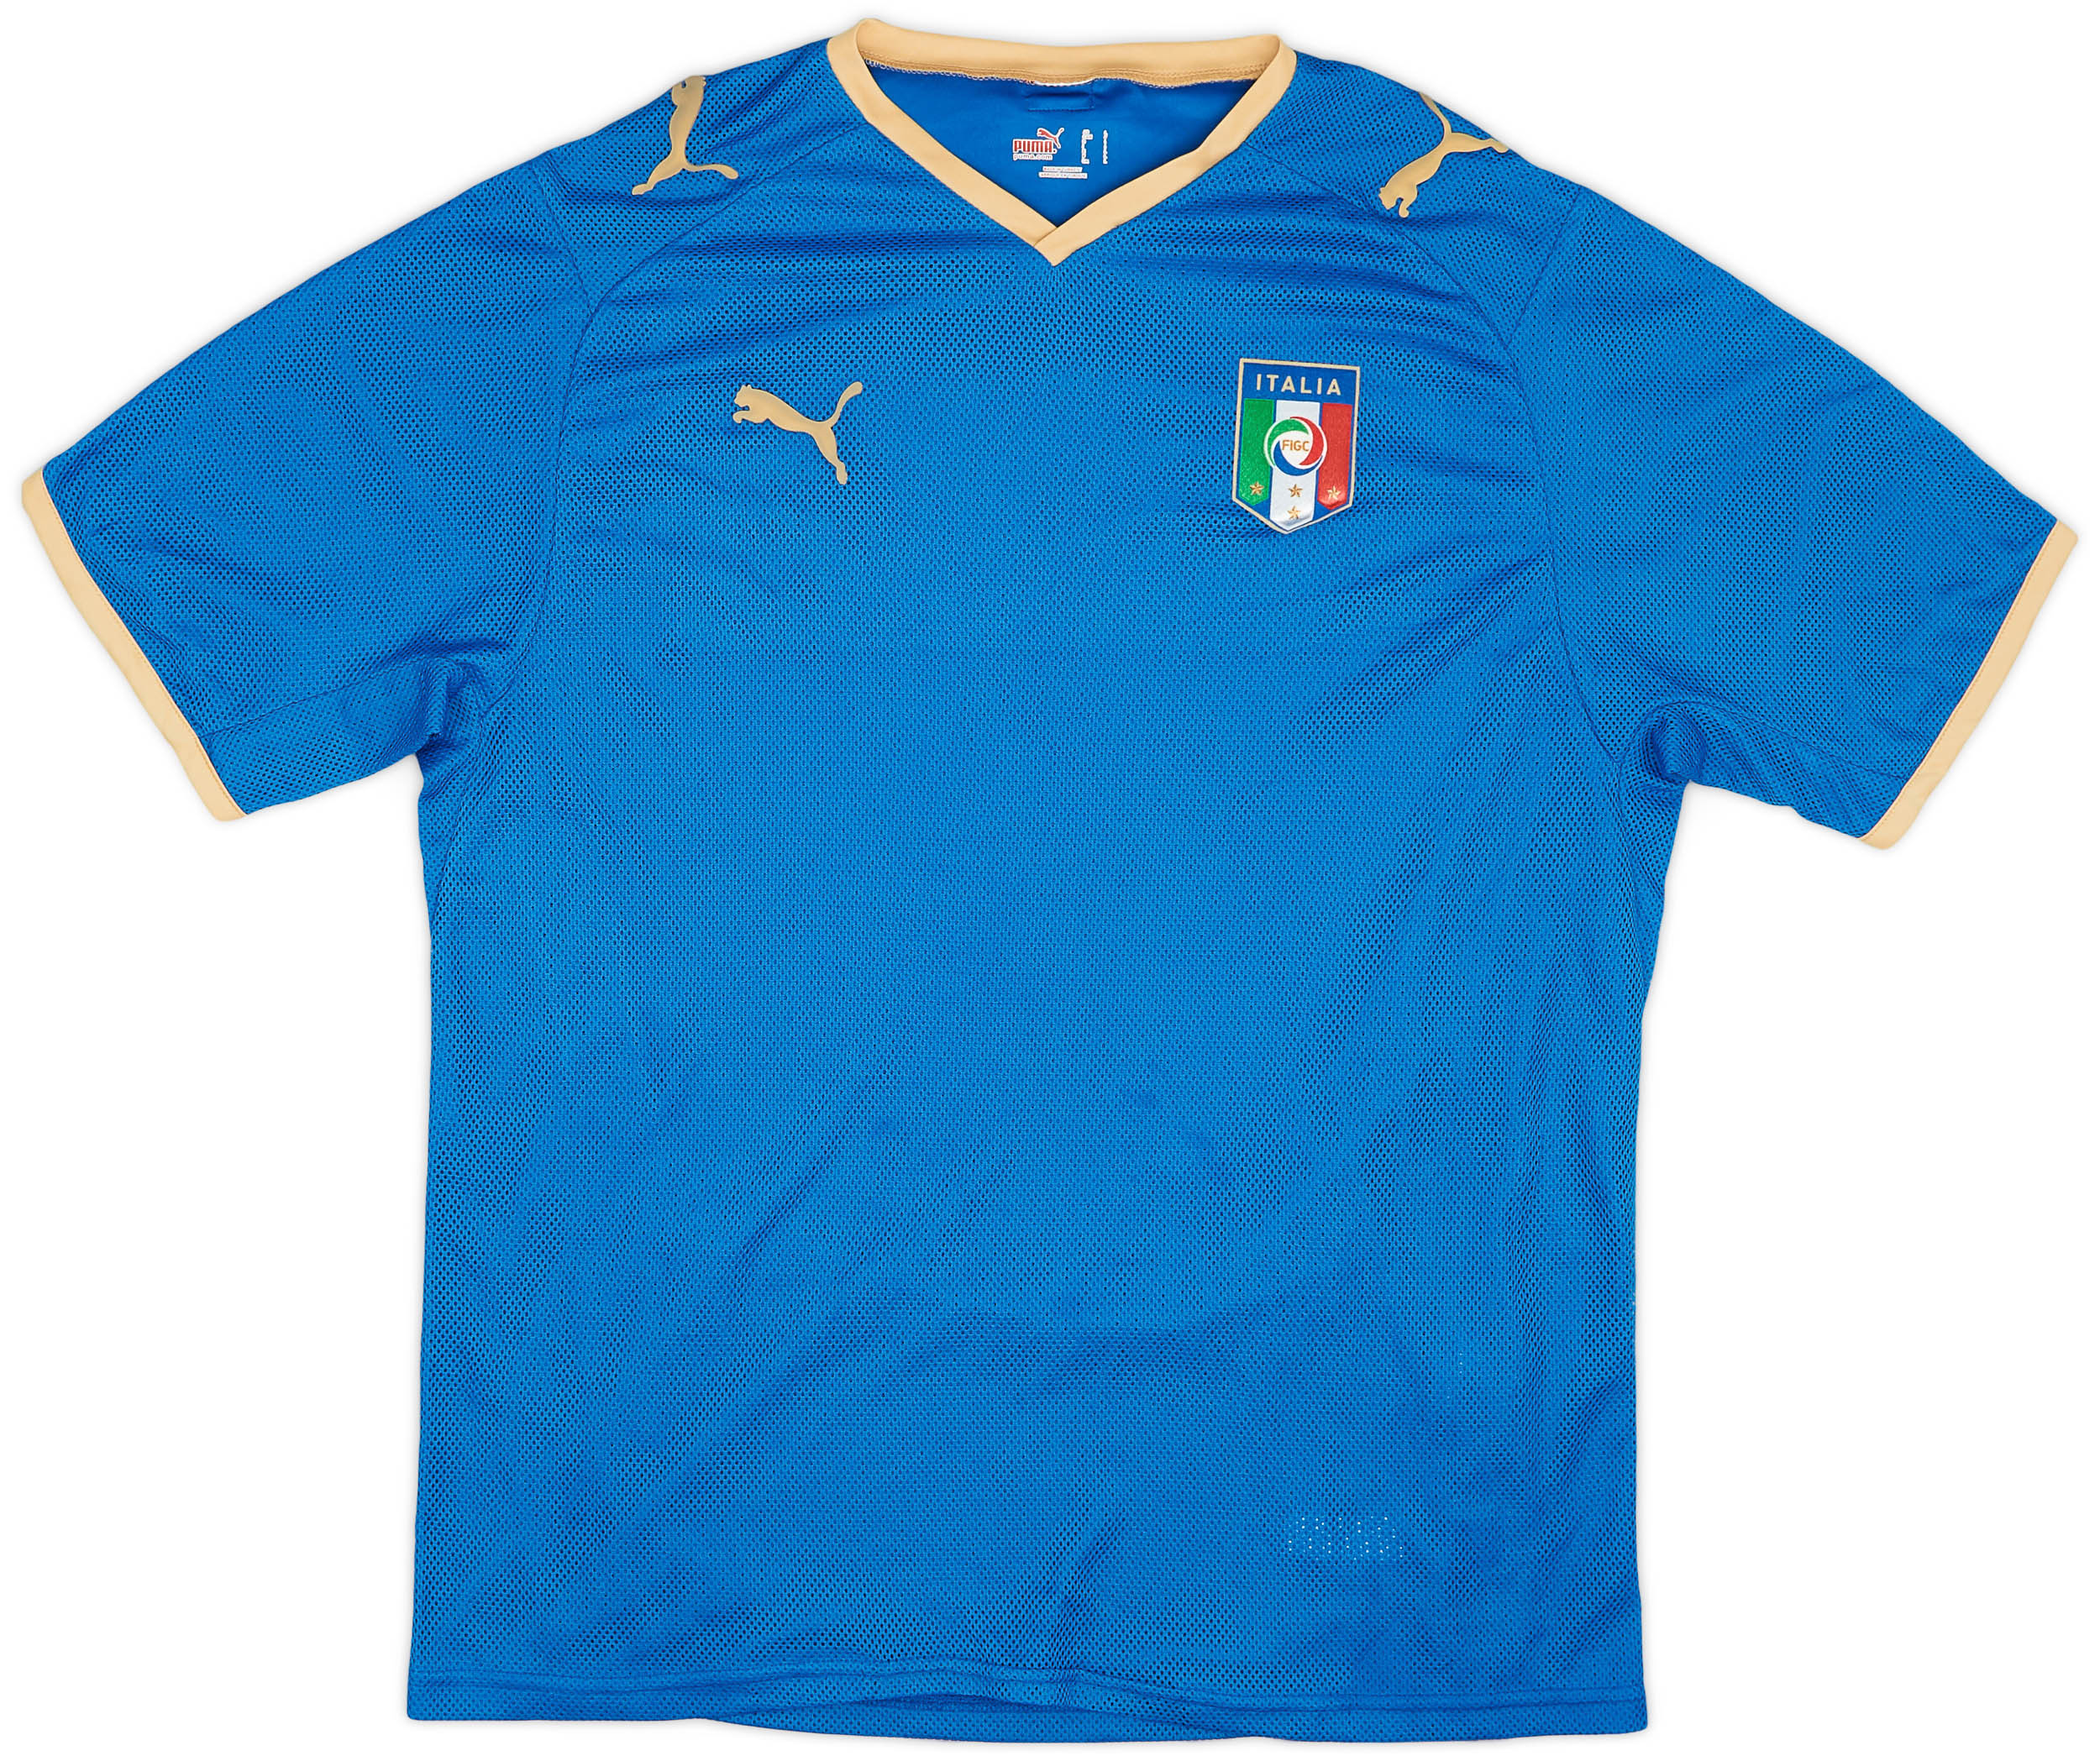 2007-08 Italy Home Shirt - 9/10 - ()